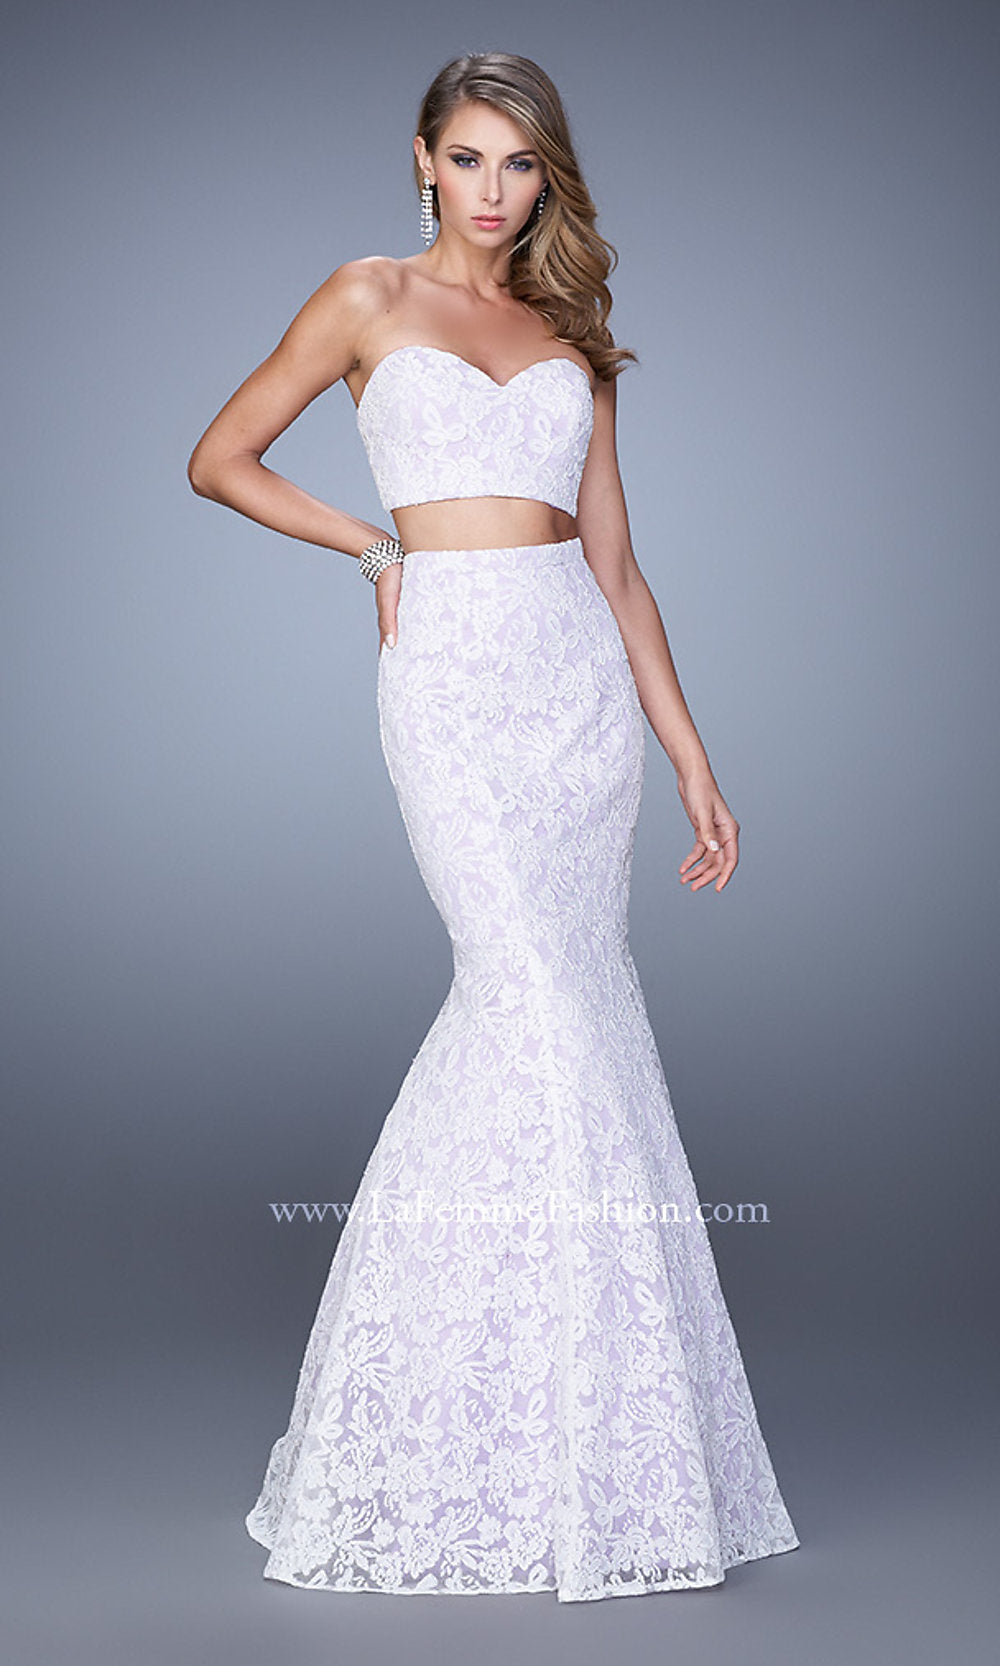 Two-Piece Long Lace Prom Dress by La Femme